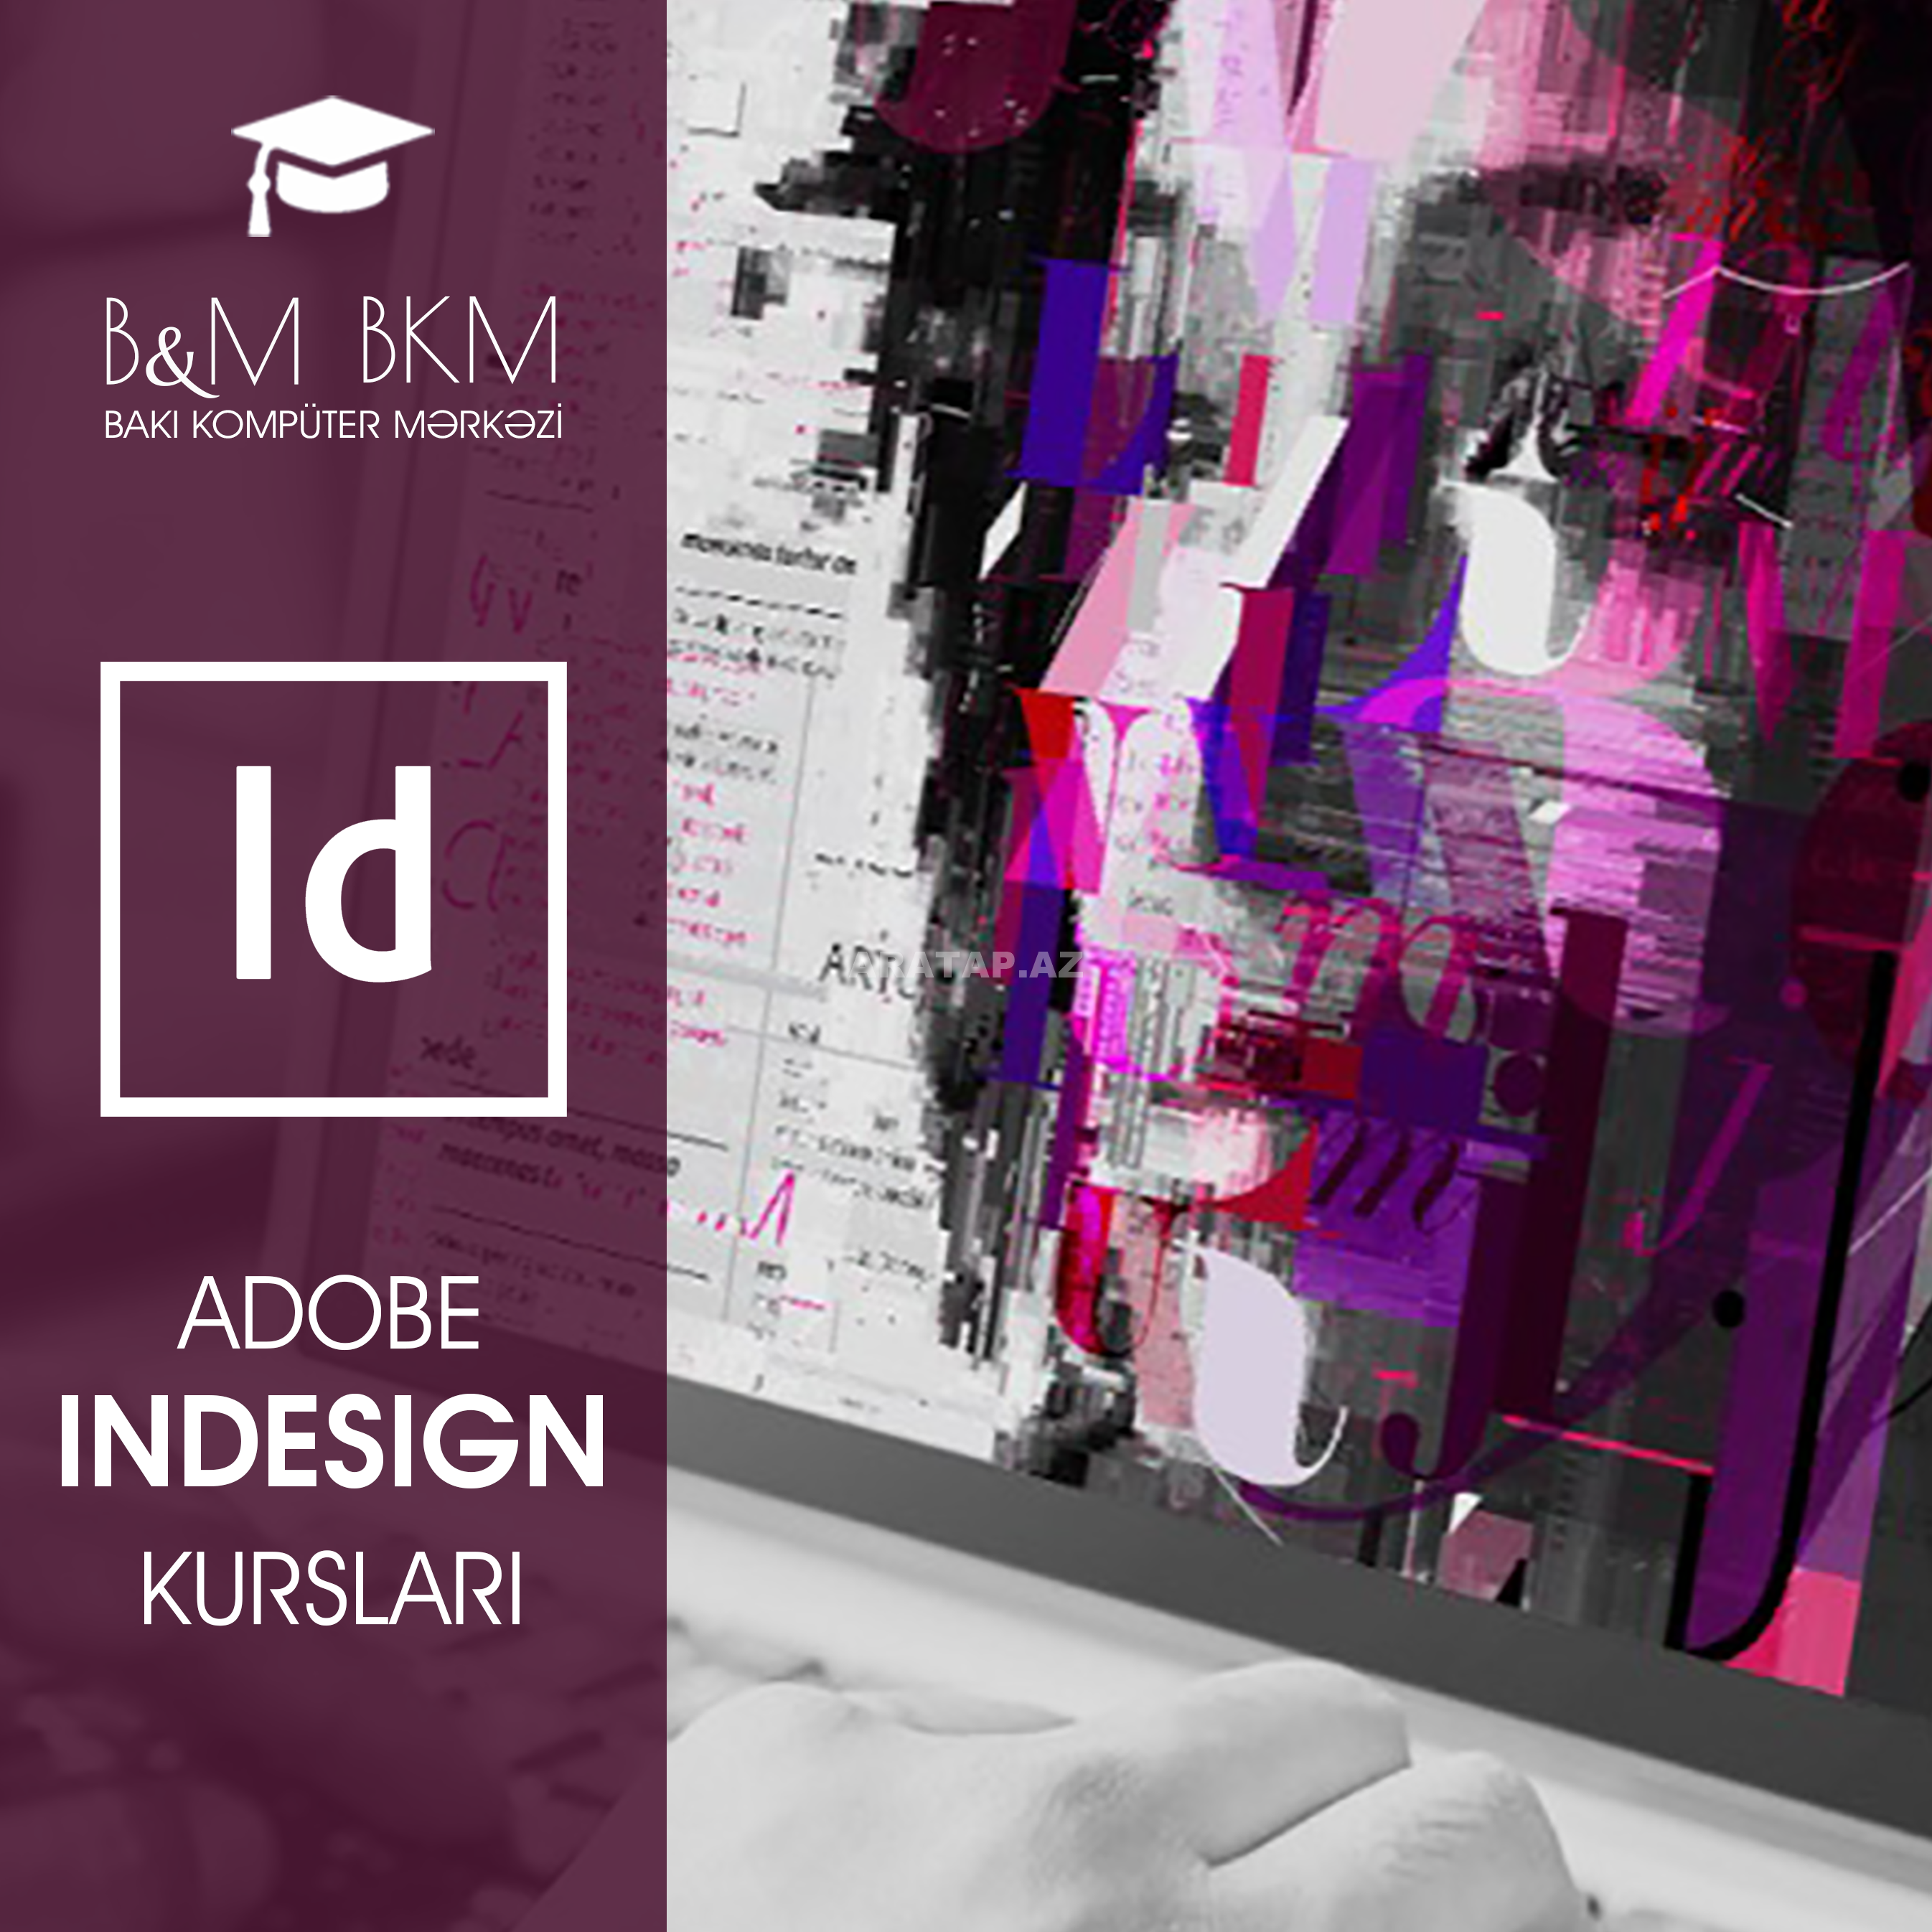 Adobe InDesign kursu